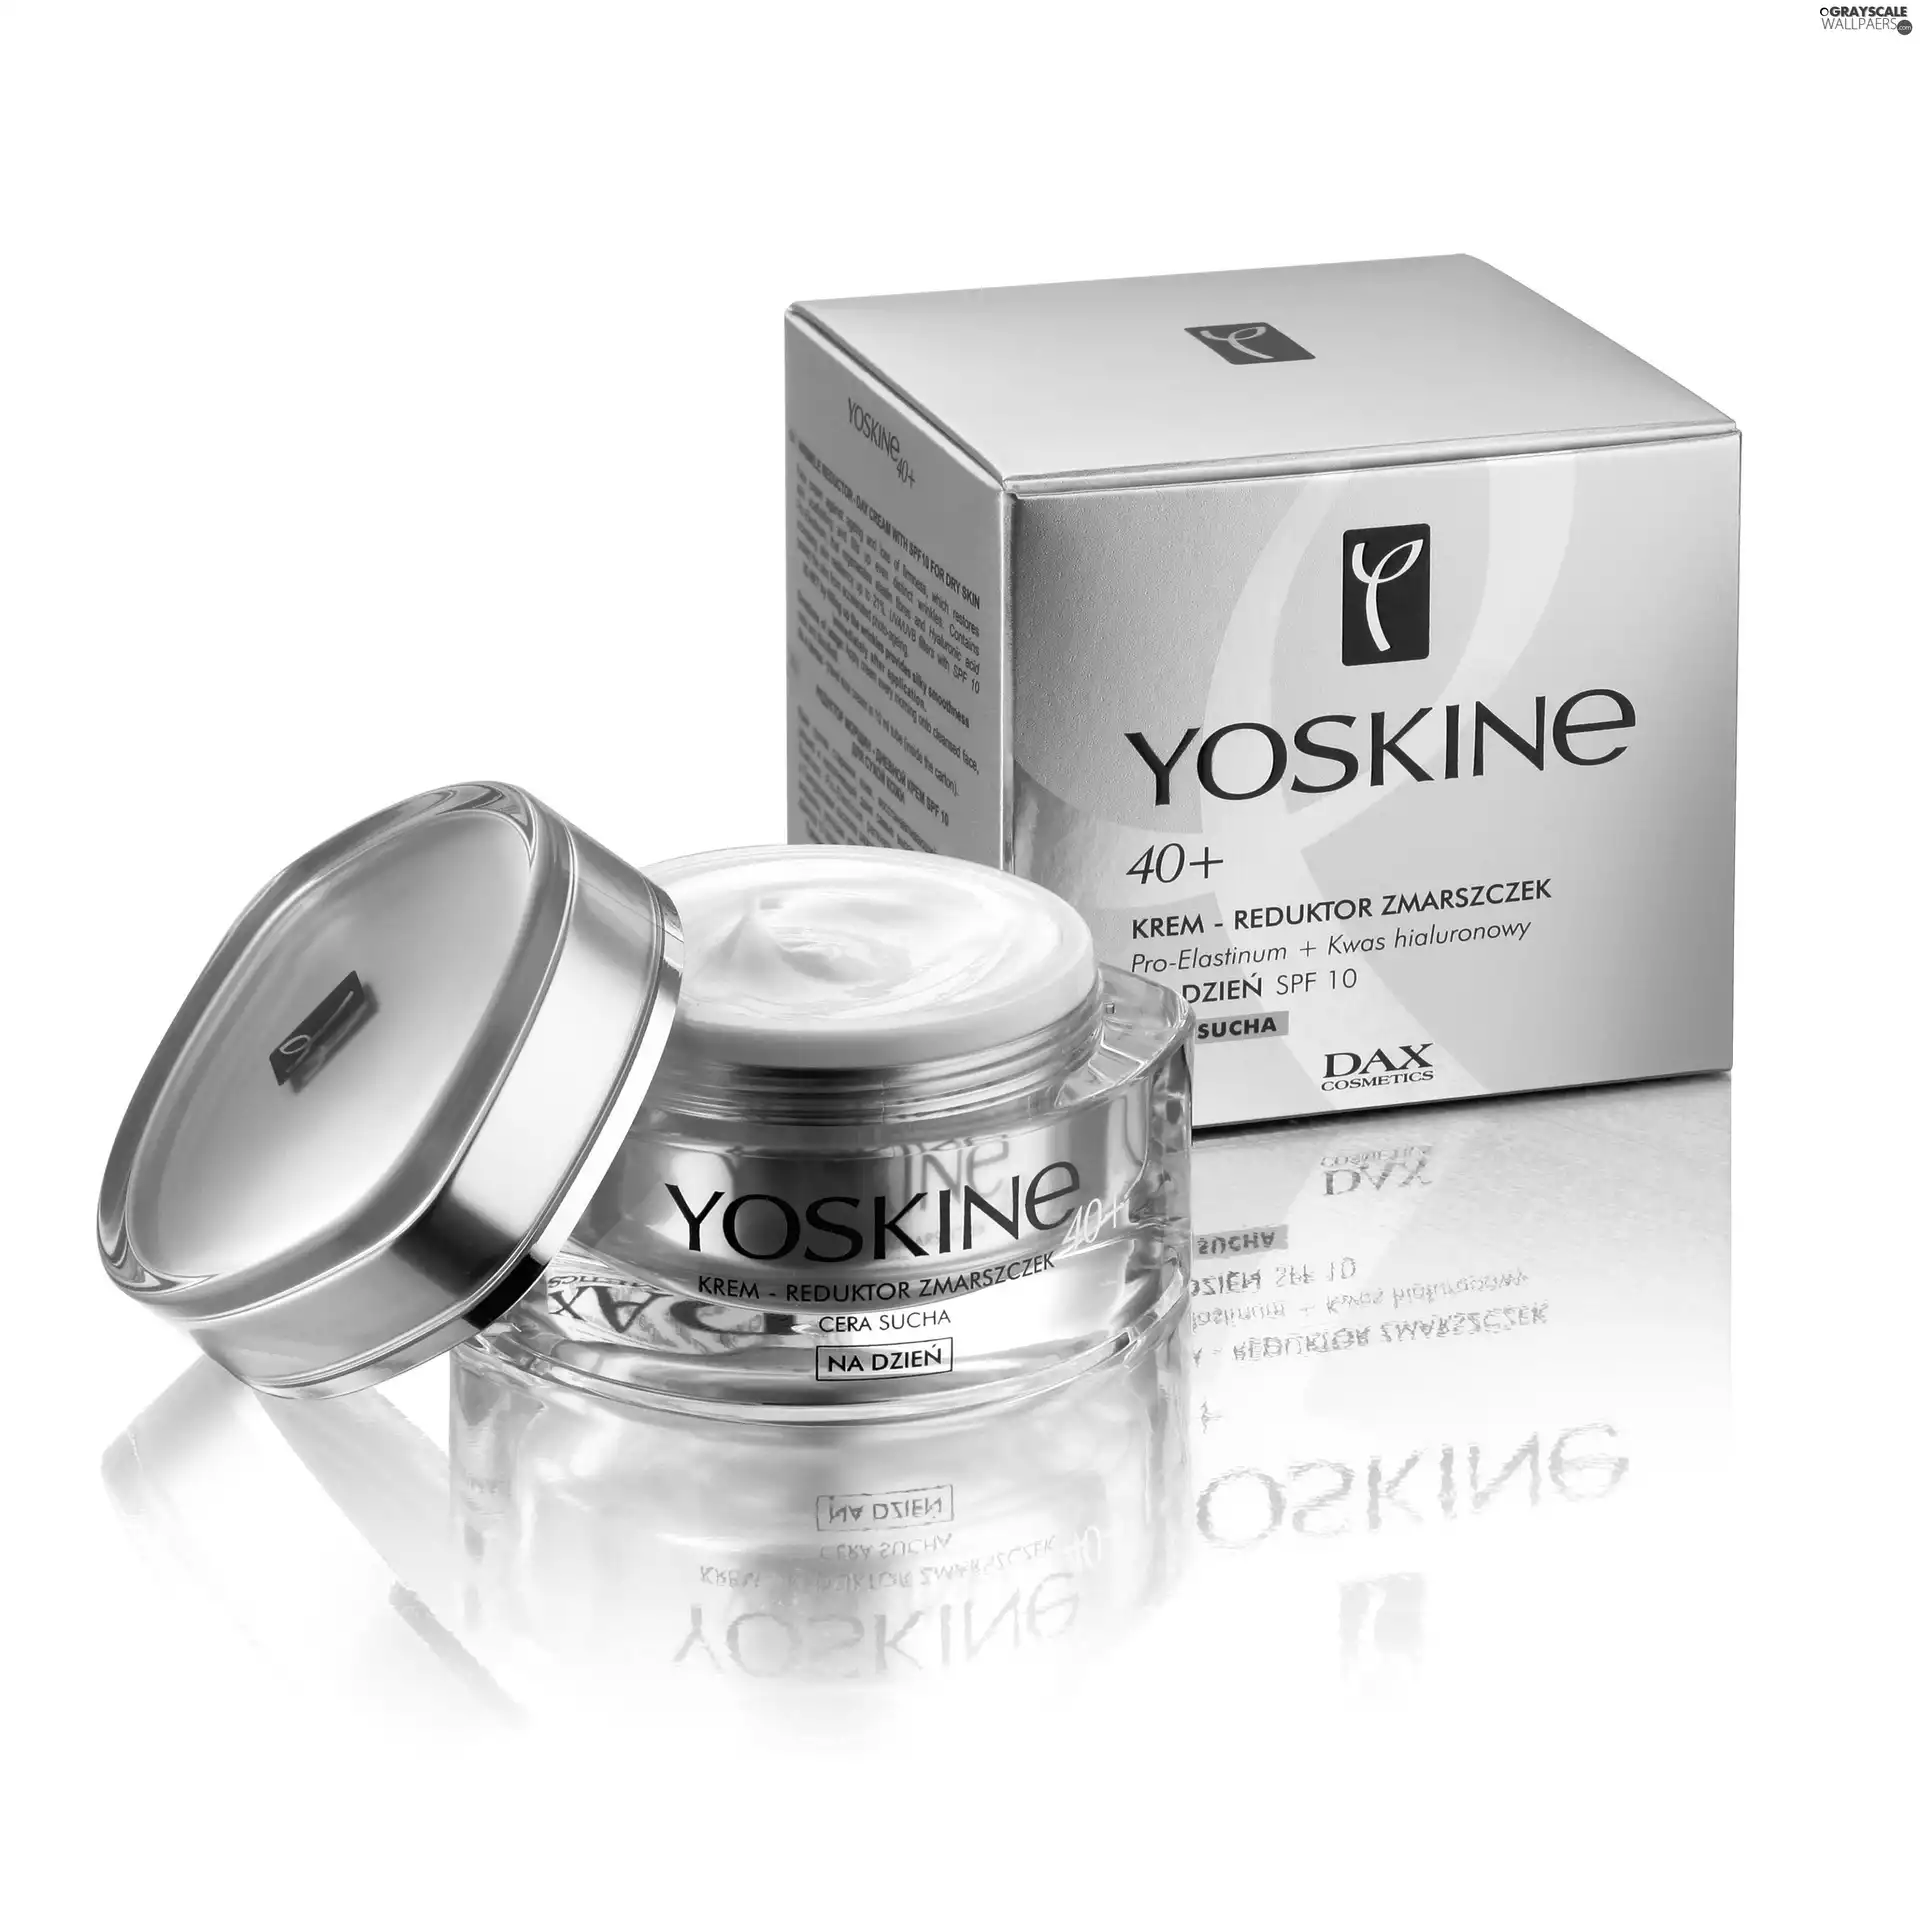 Yoskine, Exclusive, cosmetics